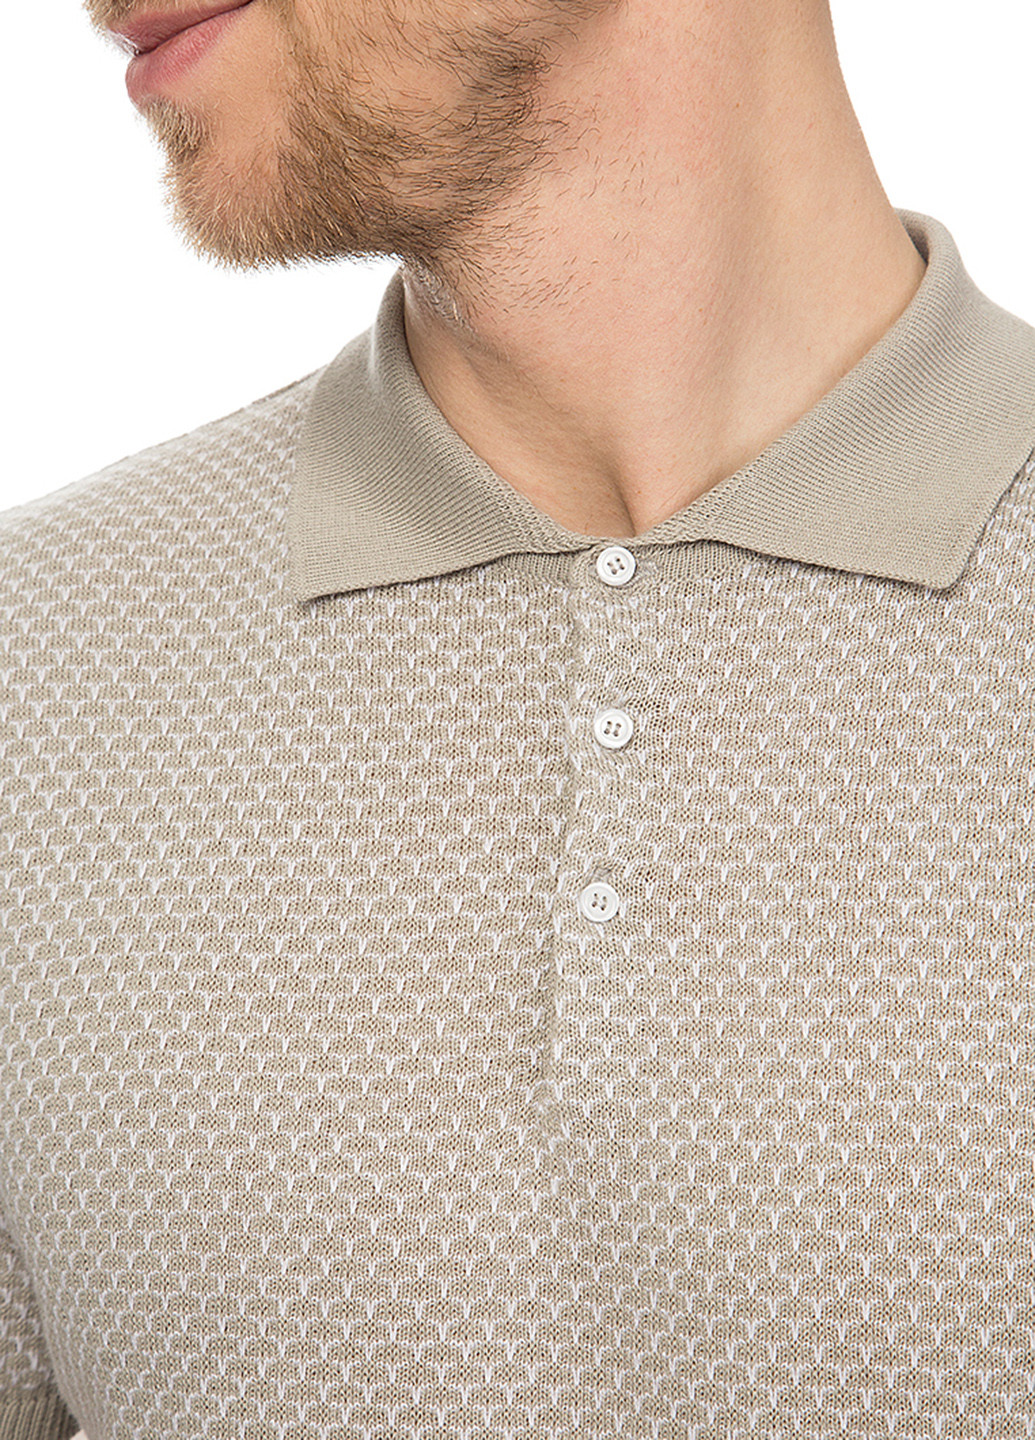 Светло-бежевая футболка-поло для мужчин VD One с геометрическим узором